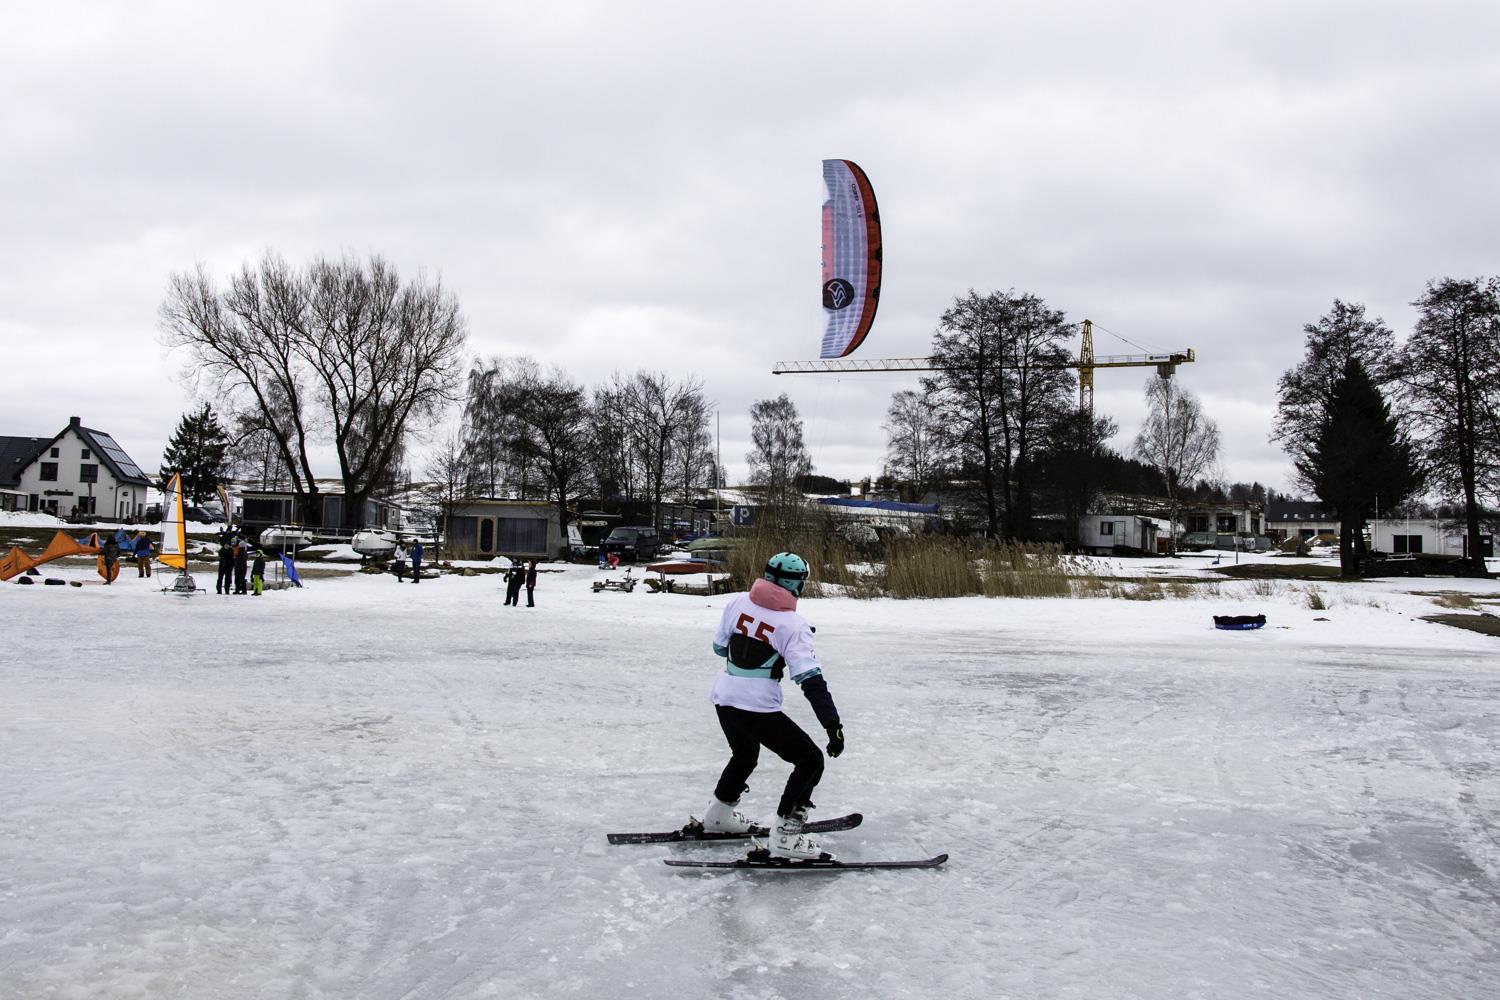 Visegarad Snowkite Cup 2022 Lipno - ice ice baby